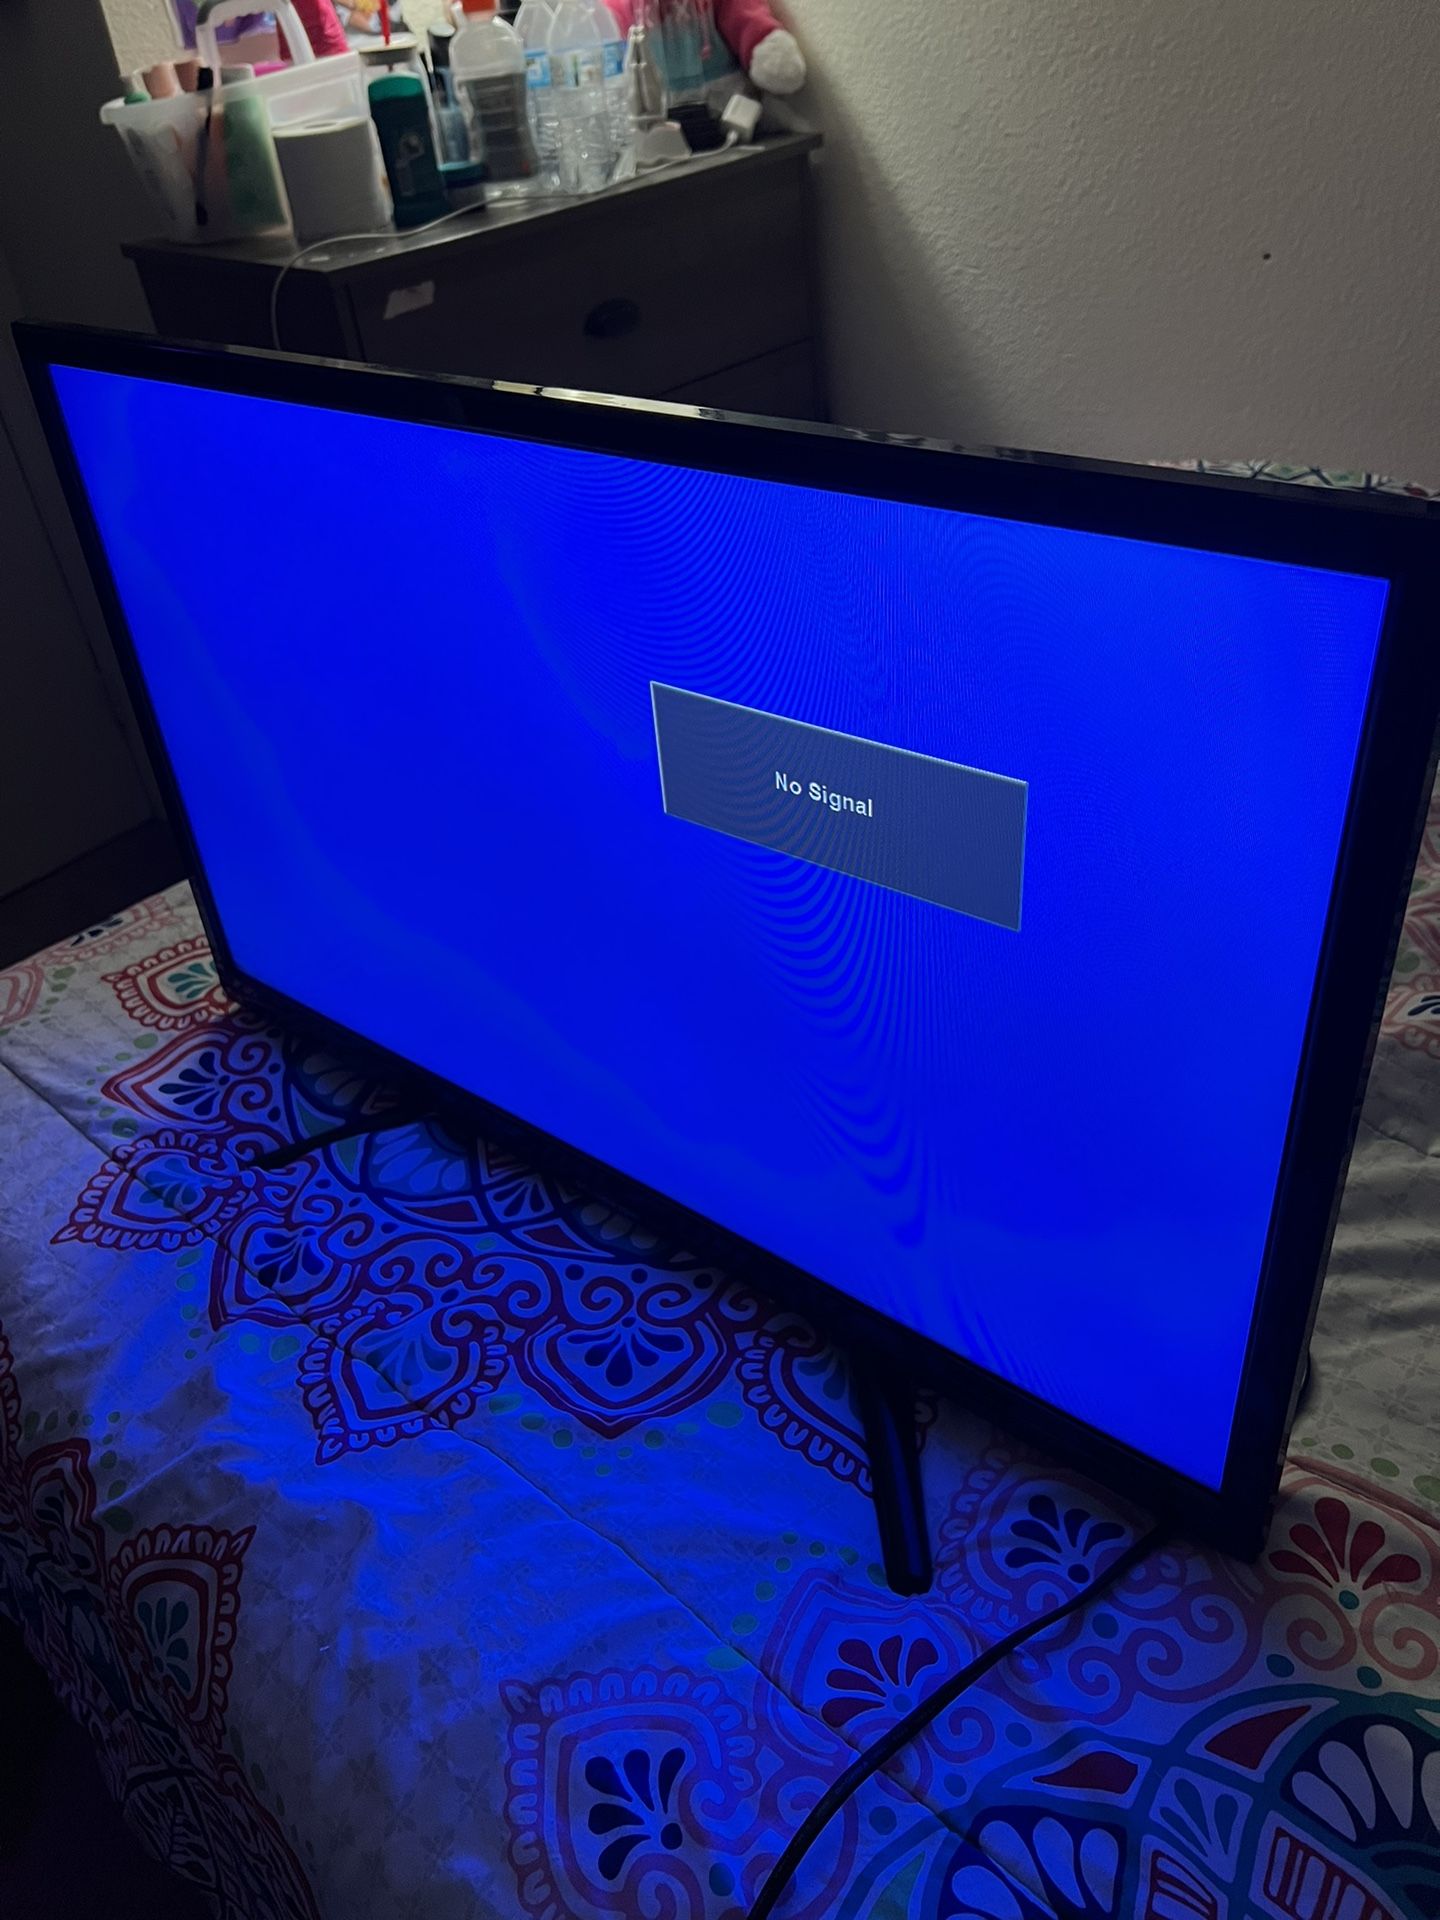 32” LED LCD Tv Not a Smart Tv